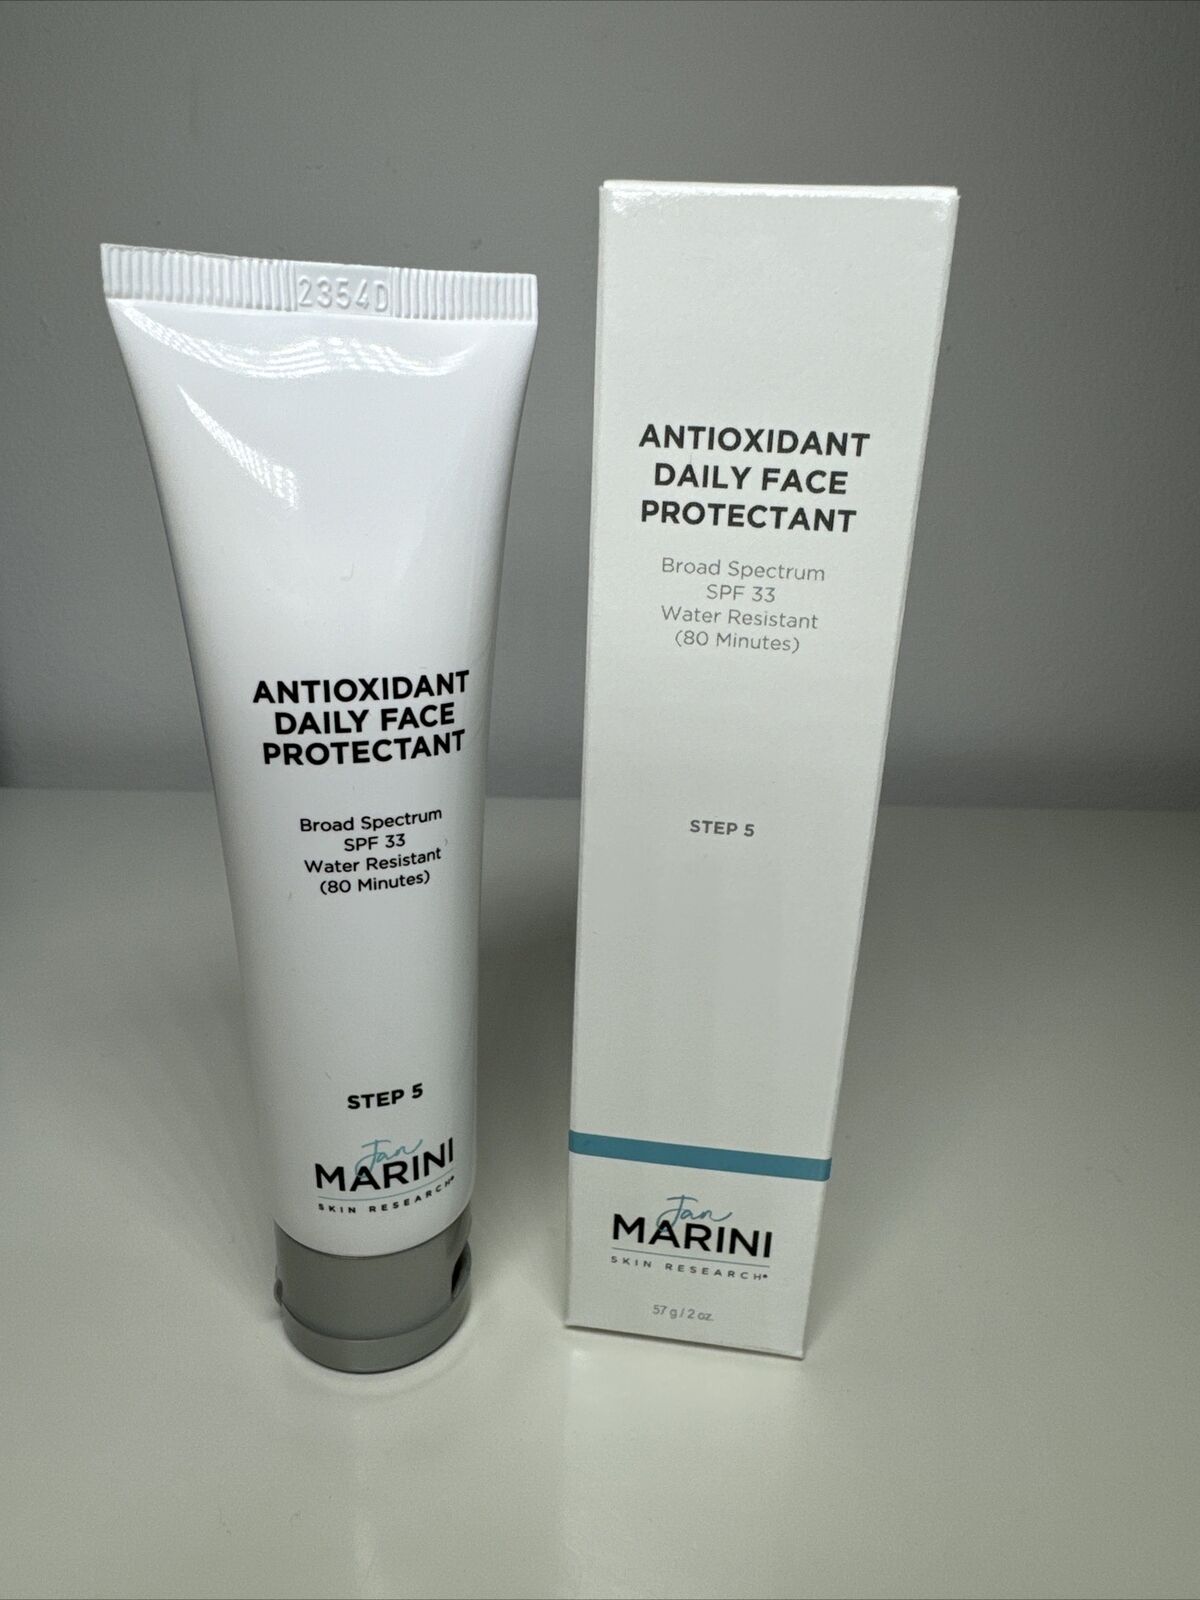 Jan Marini Antioxidant Daily Face Protectant SPF 33 57 g / 2 Oz New In Box 11/25